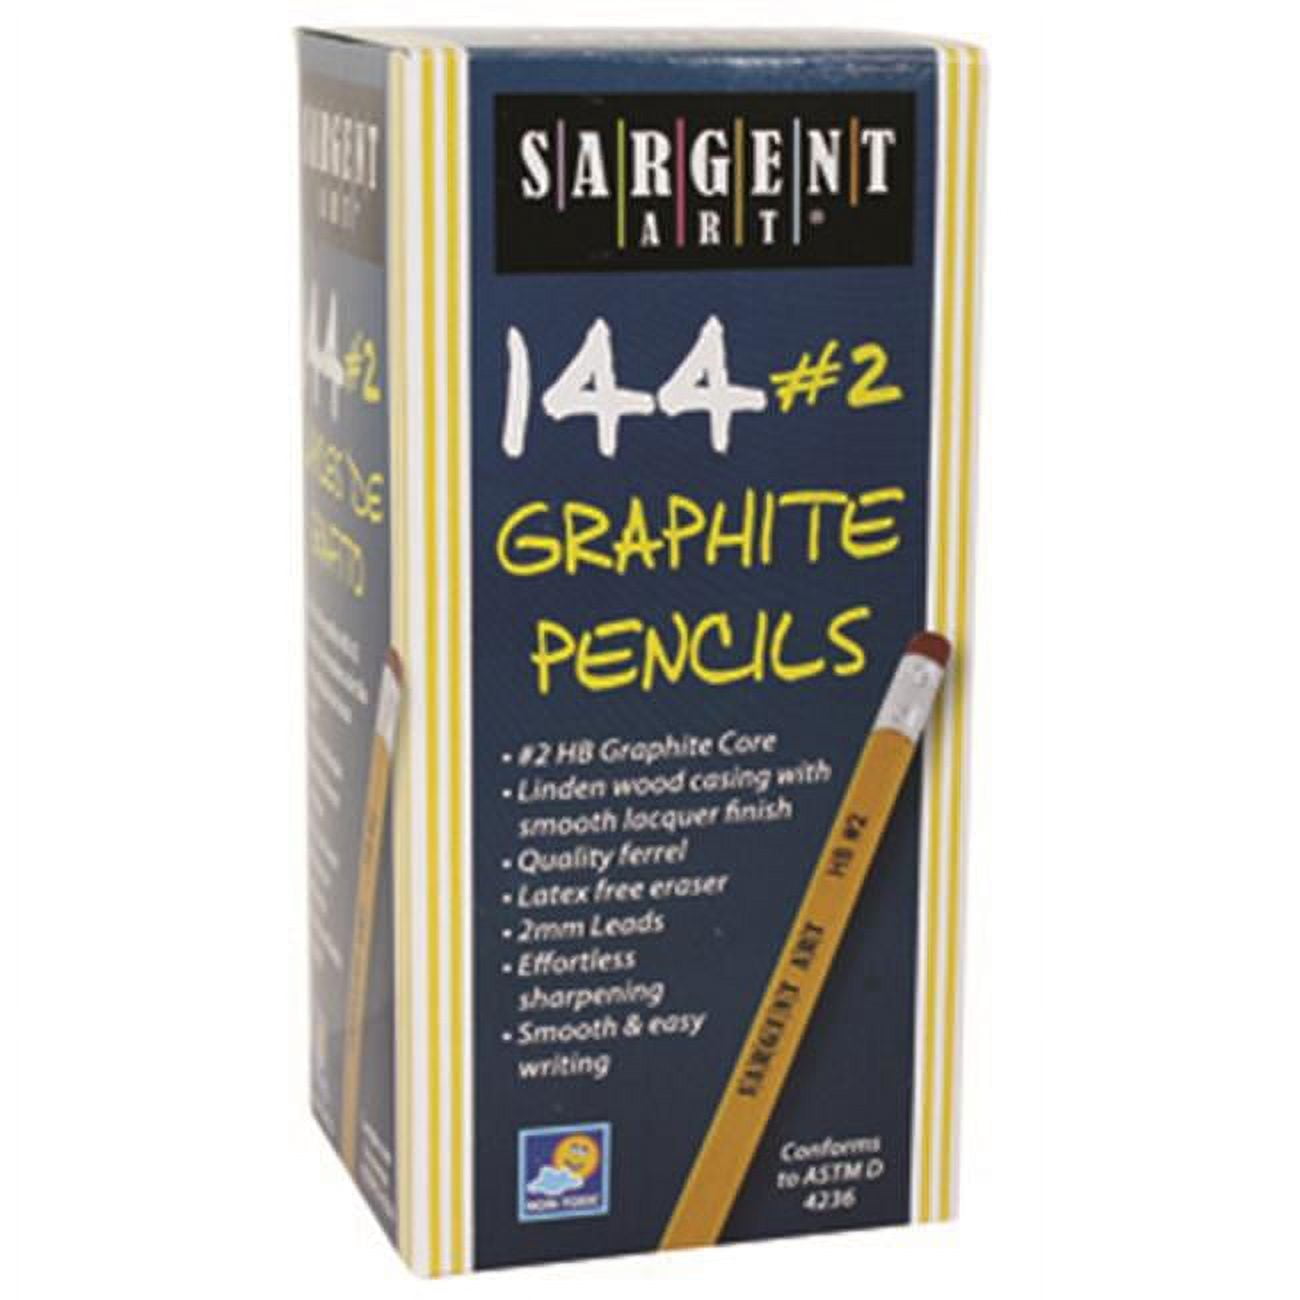 Prismacolor Quality Art Set - Premier Colored Pencils 132 Pack Premier  Pencil Sharpener 1 Pack and Latex-Free Scholar Eraser 1 Pack